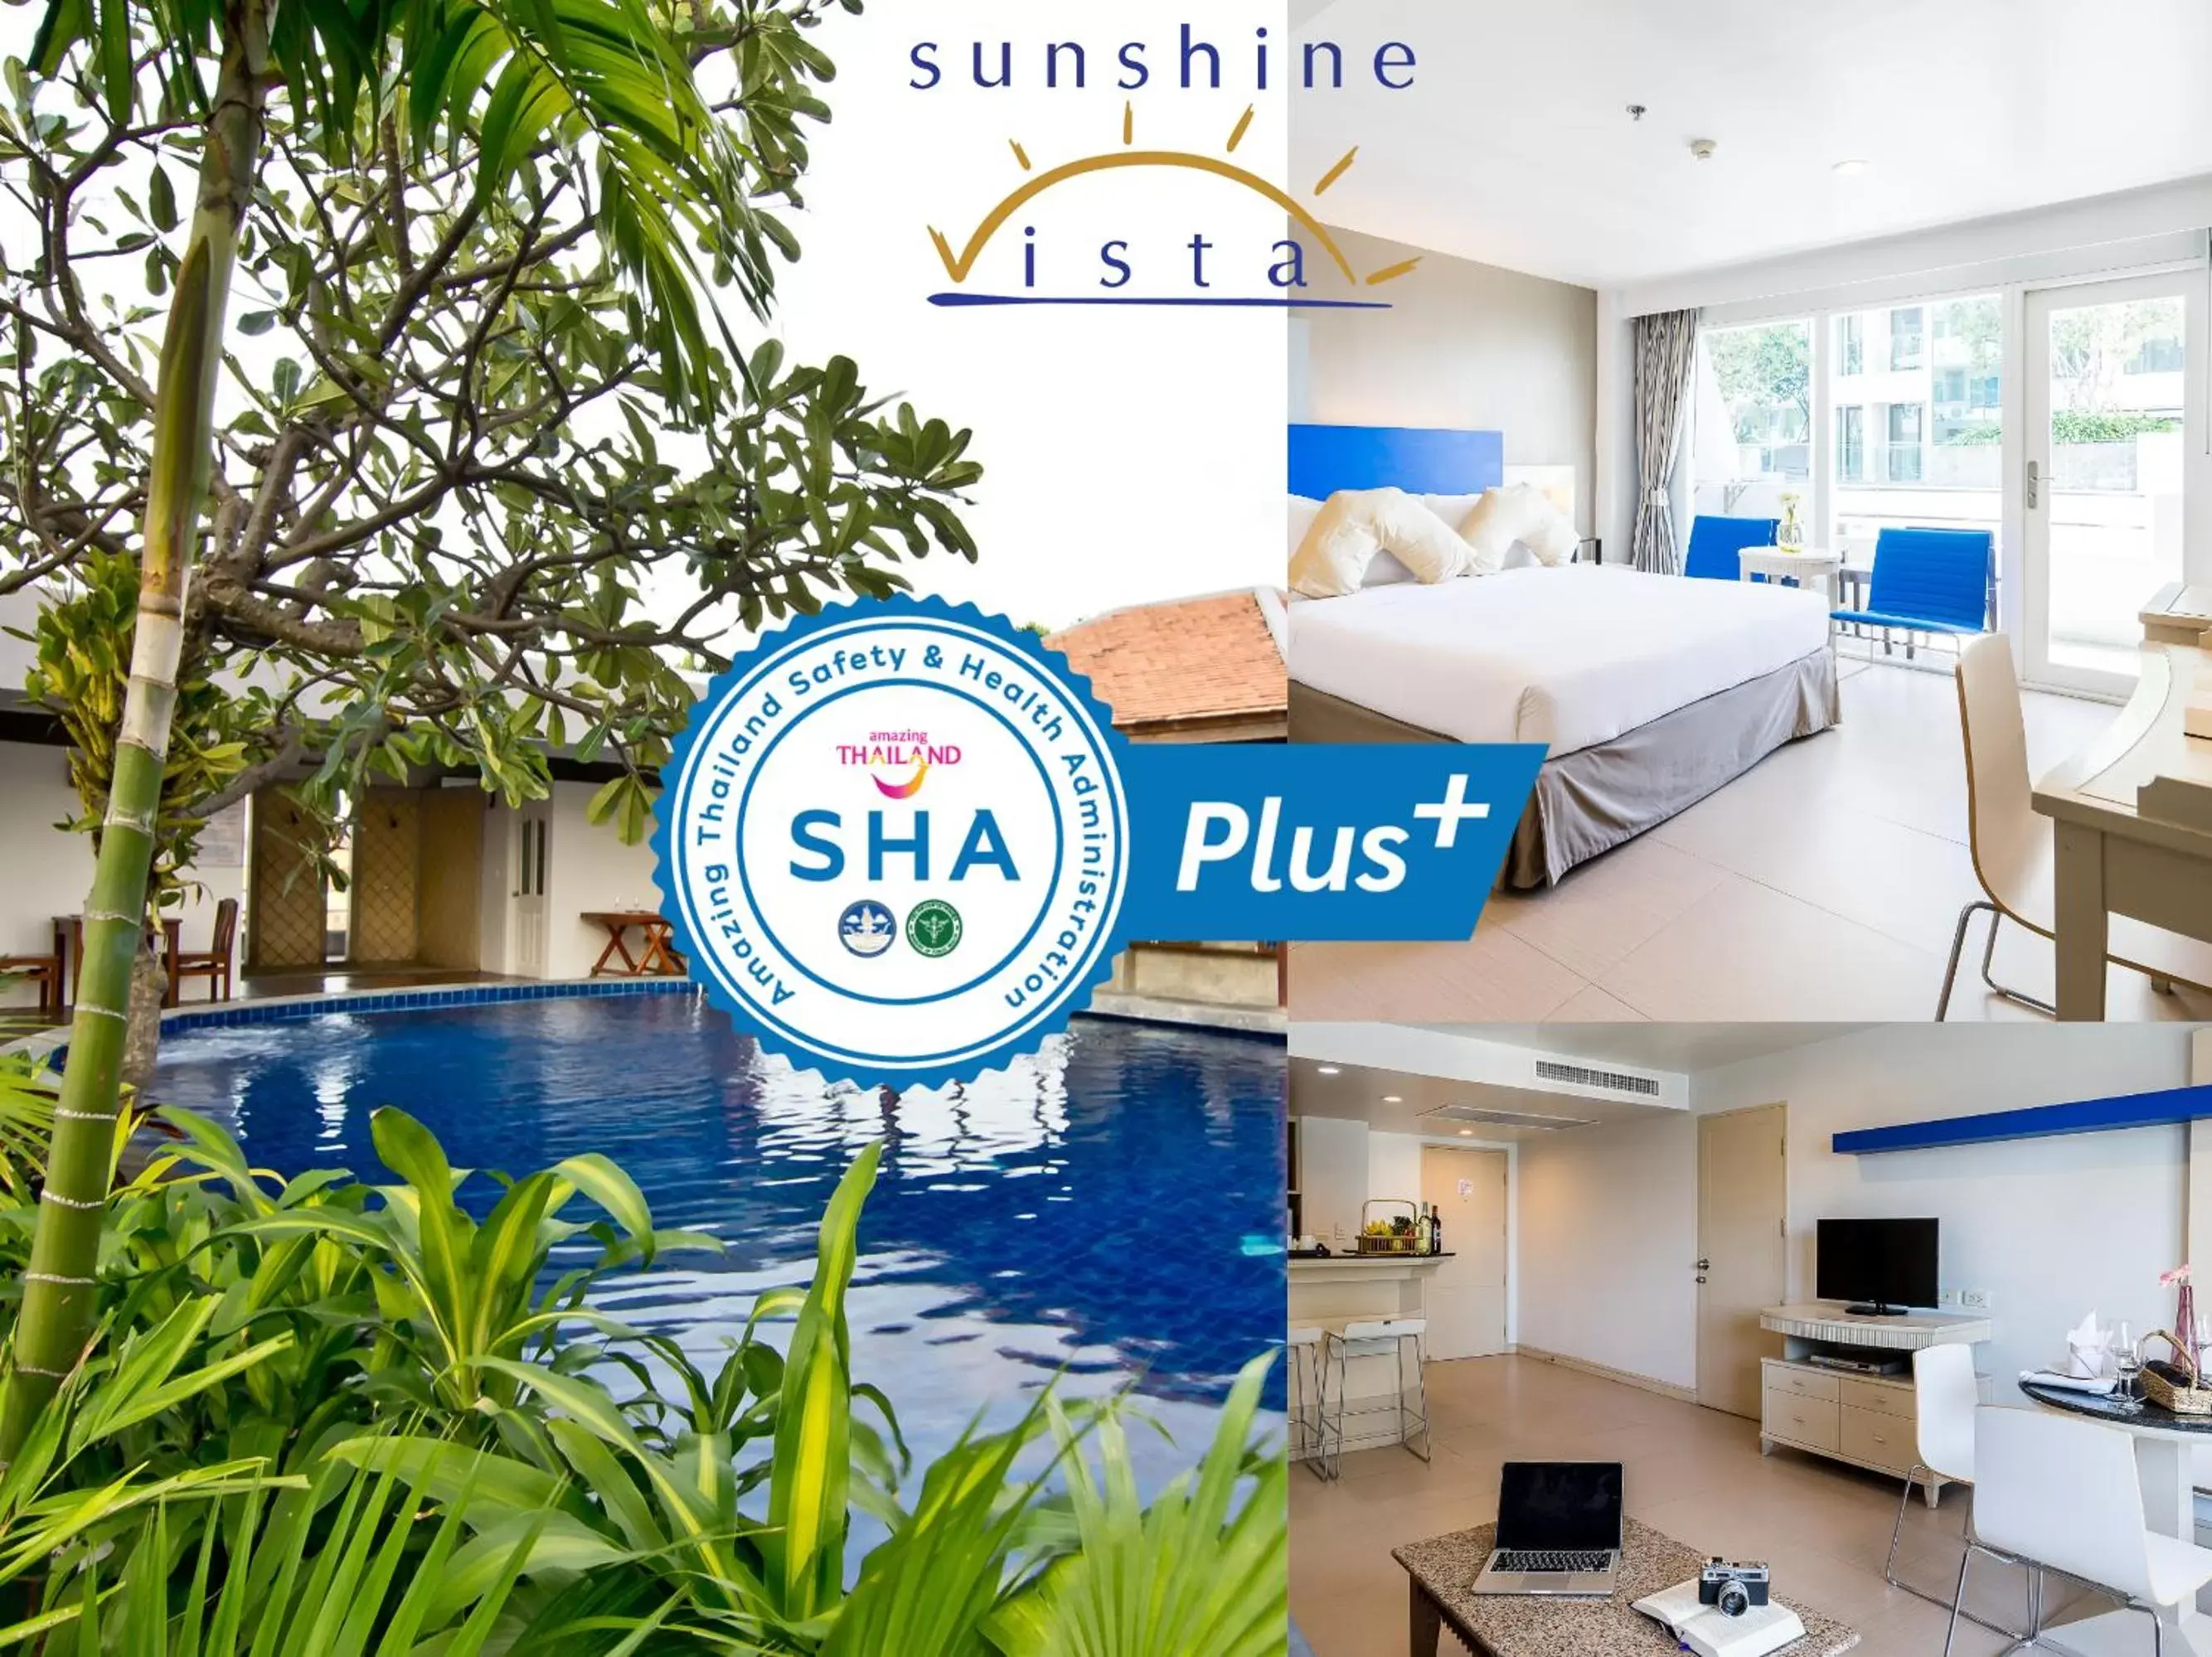 Property logo or sign in Sunshine Vista Hotel - SHA Plus